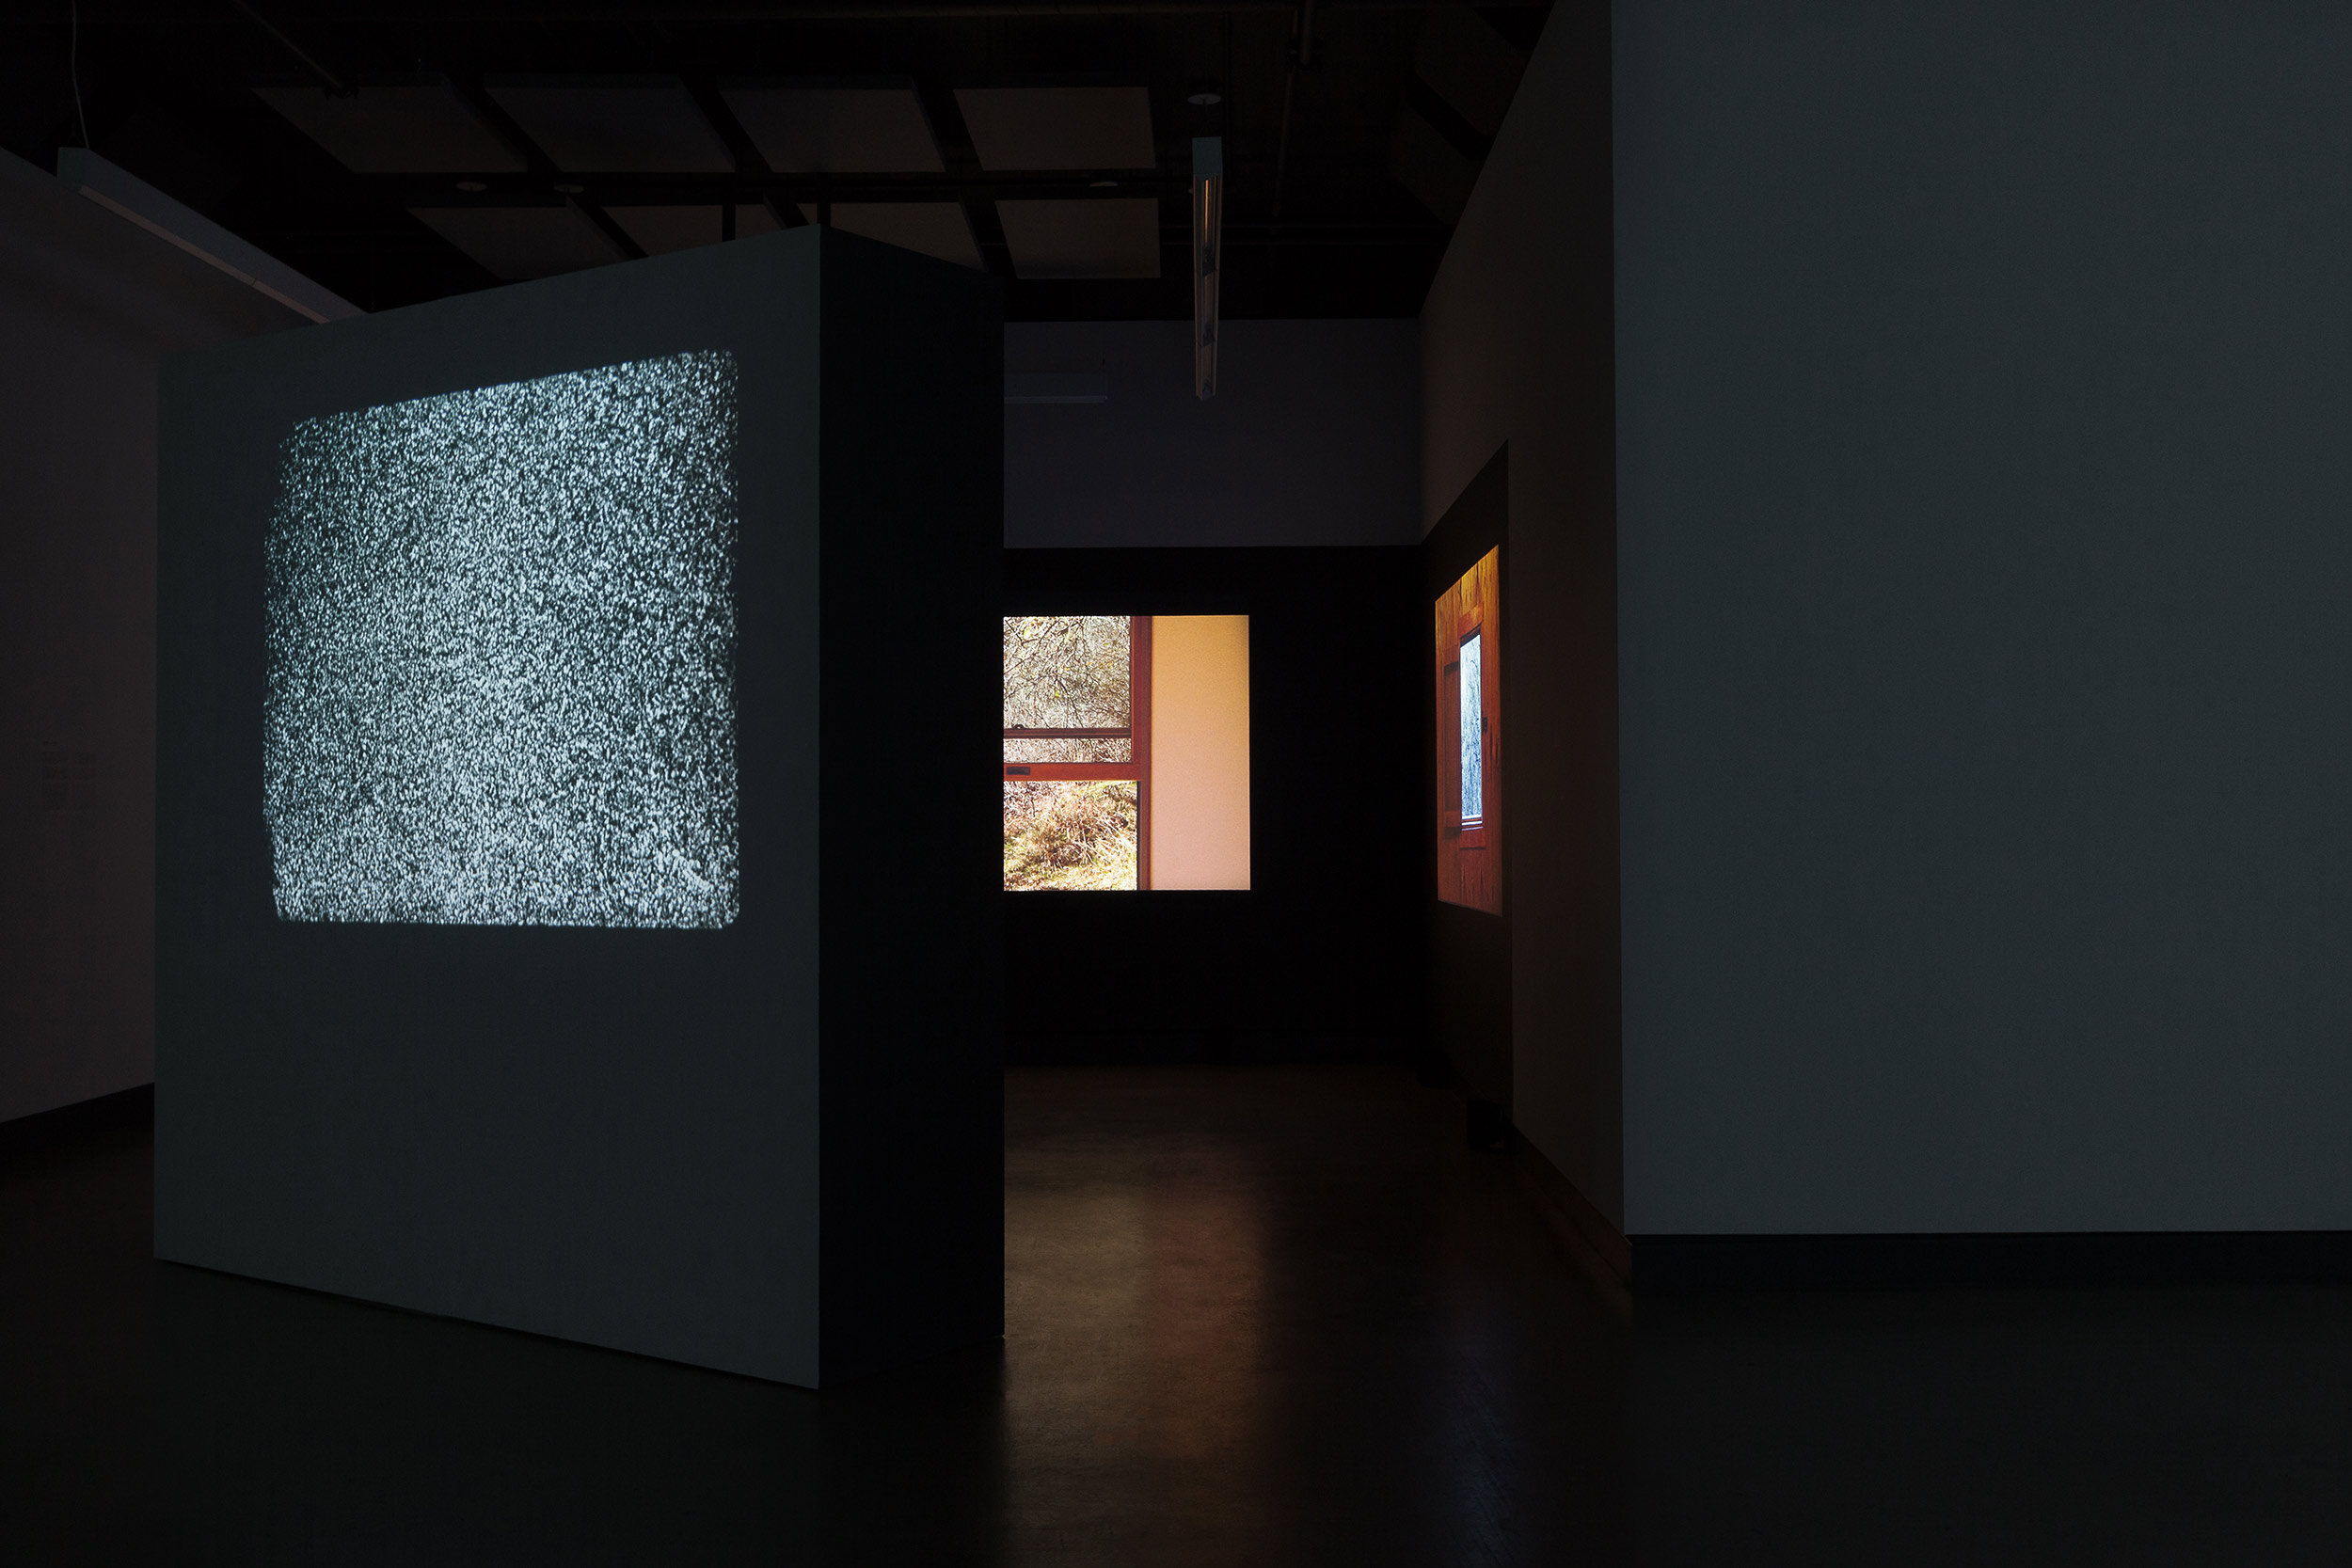  © Vue d’installation de l’exposition, Dazibao, 2018. De gauche à droite : Miriam Sampaio, James Benning. Photo : Marilou Crispin. 